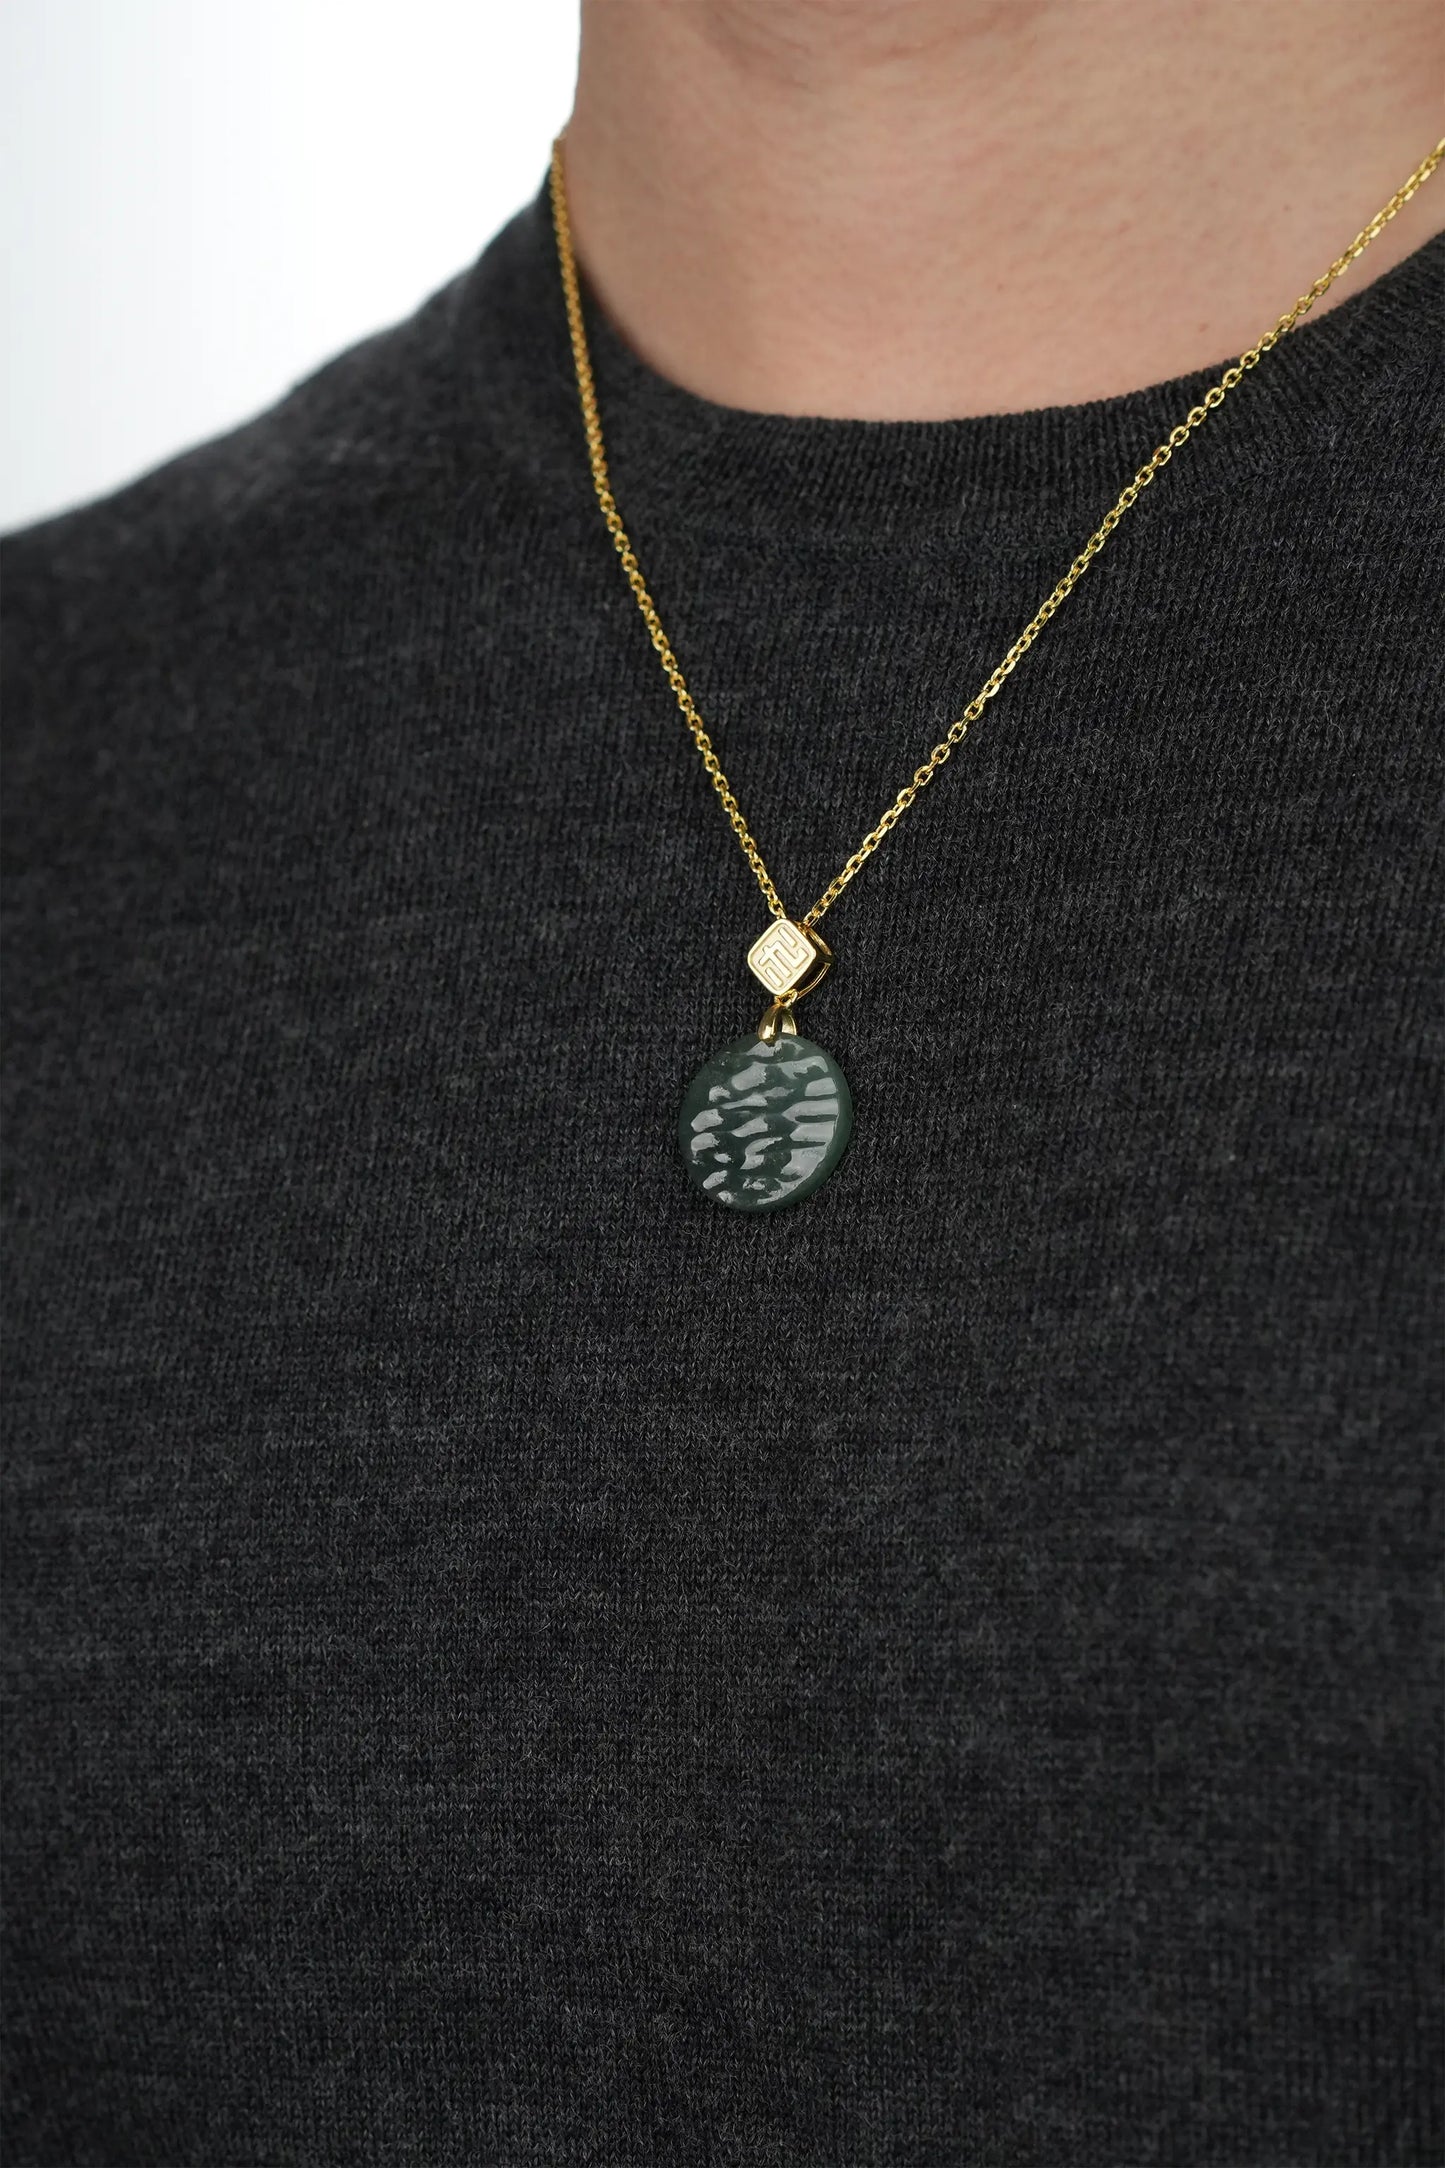 “The West Lake” Jadeite Jade Pendant Necklace